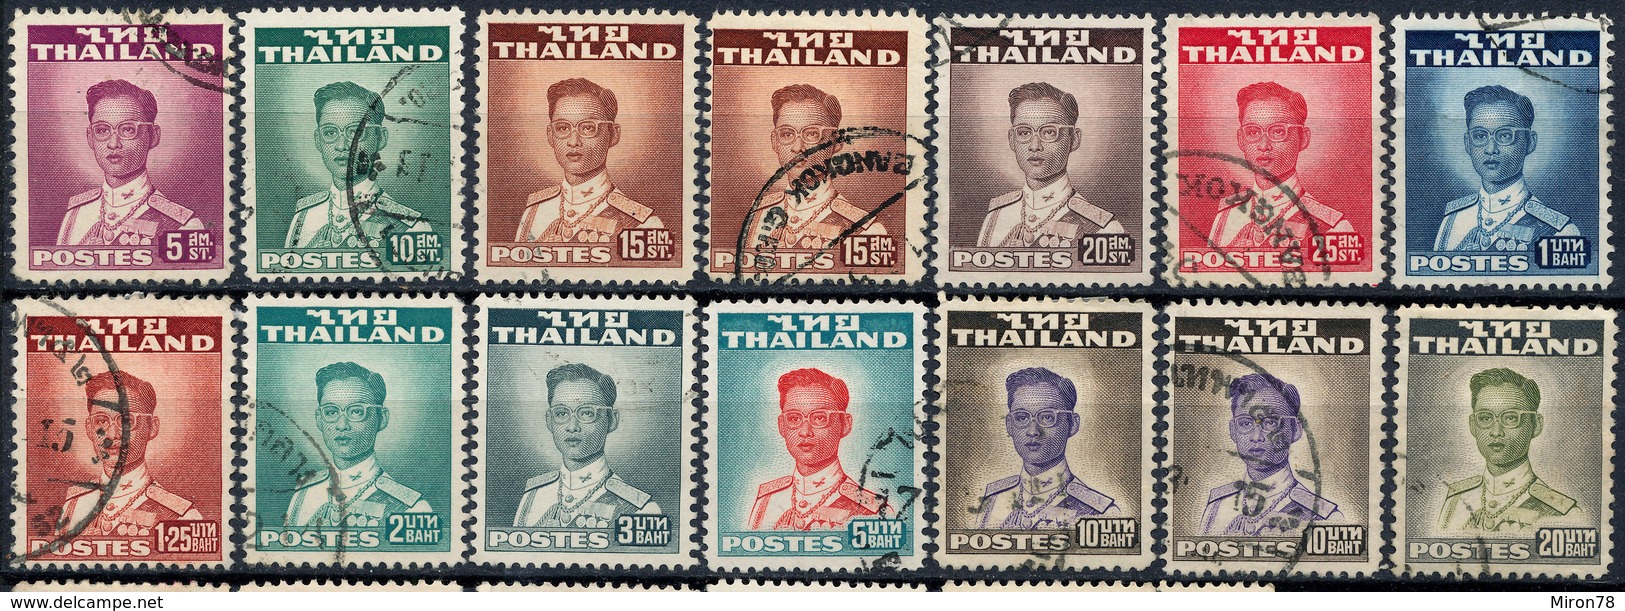 Stamp Siam, Thailand 1951  Used Lot99 - Thailand